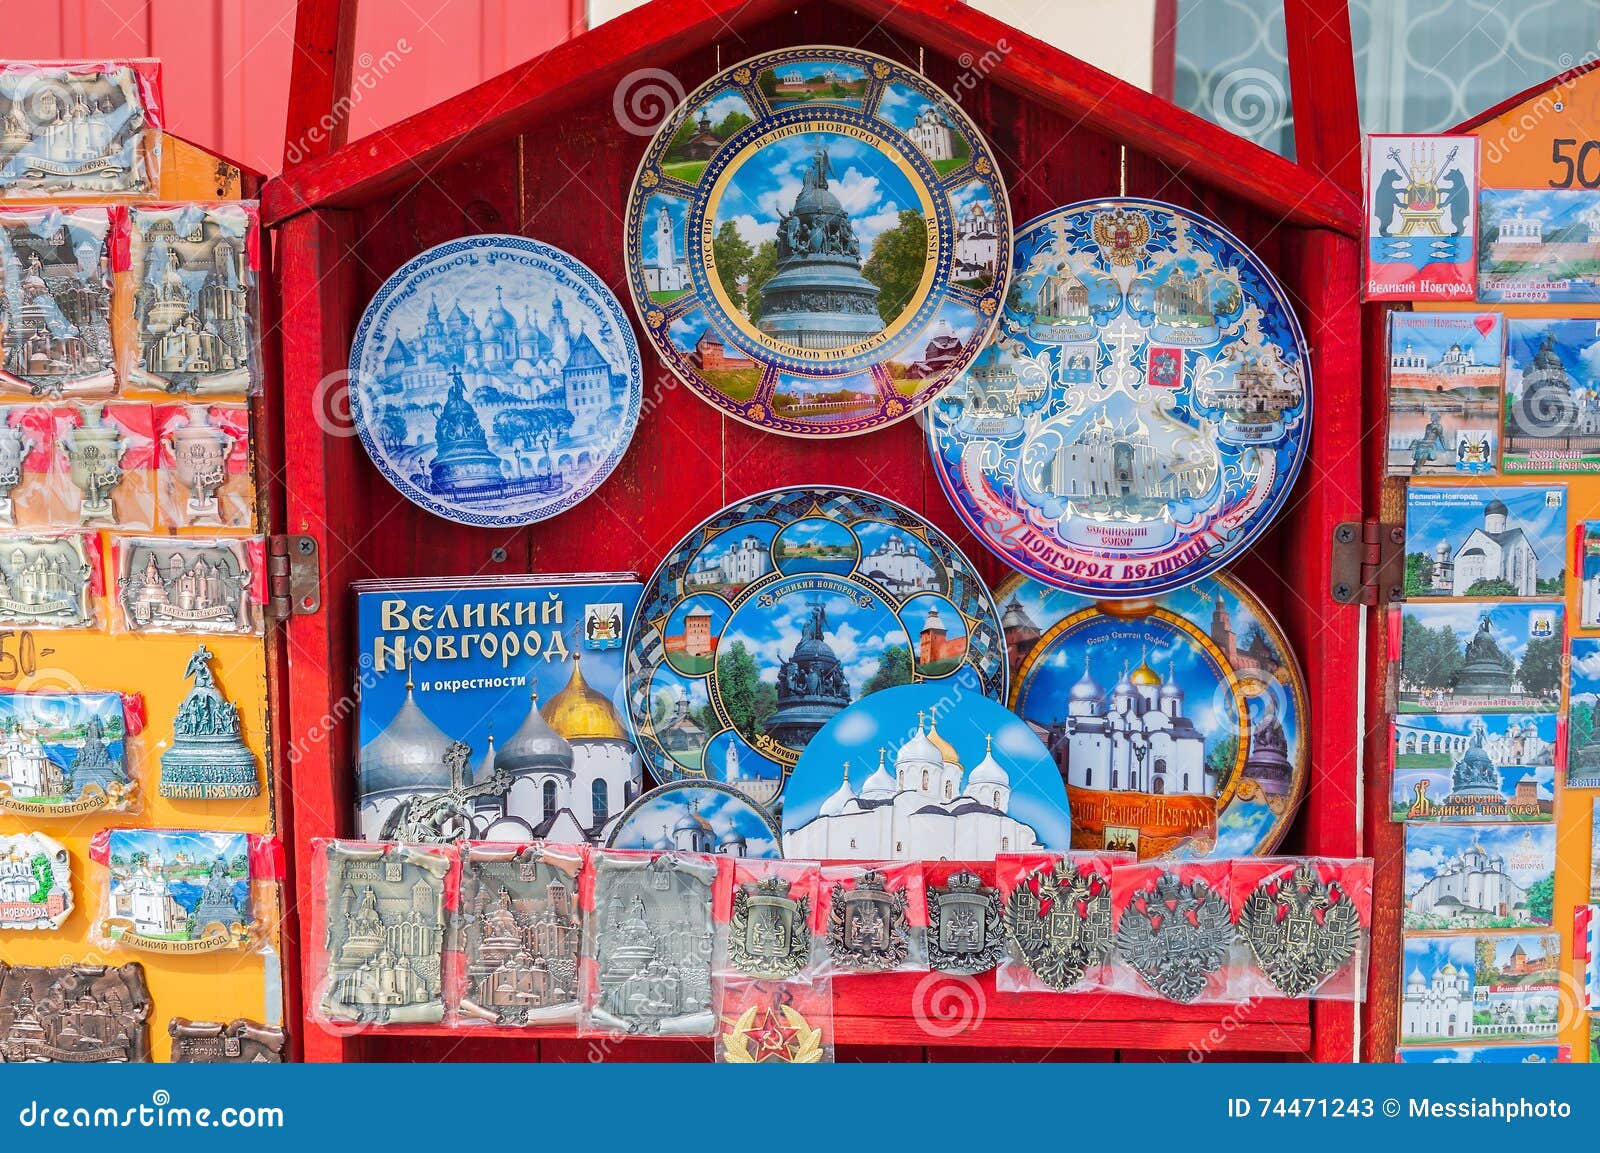 Murmansk Ceramics magnet souvenir 